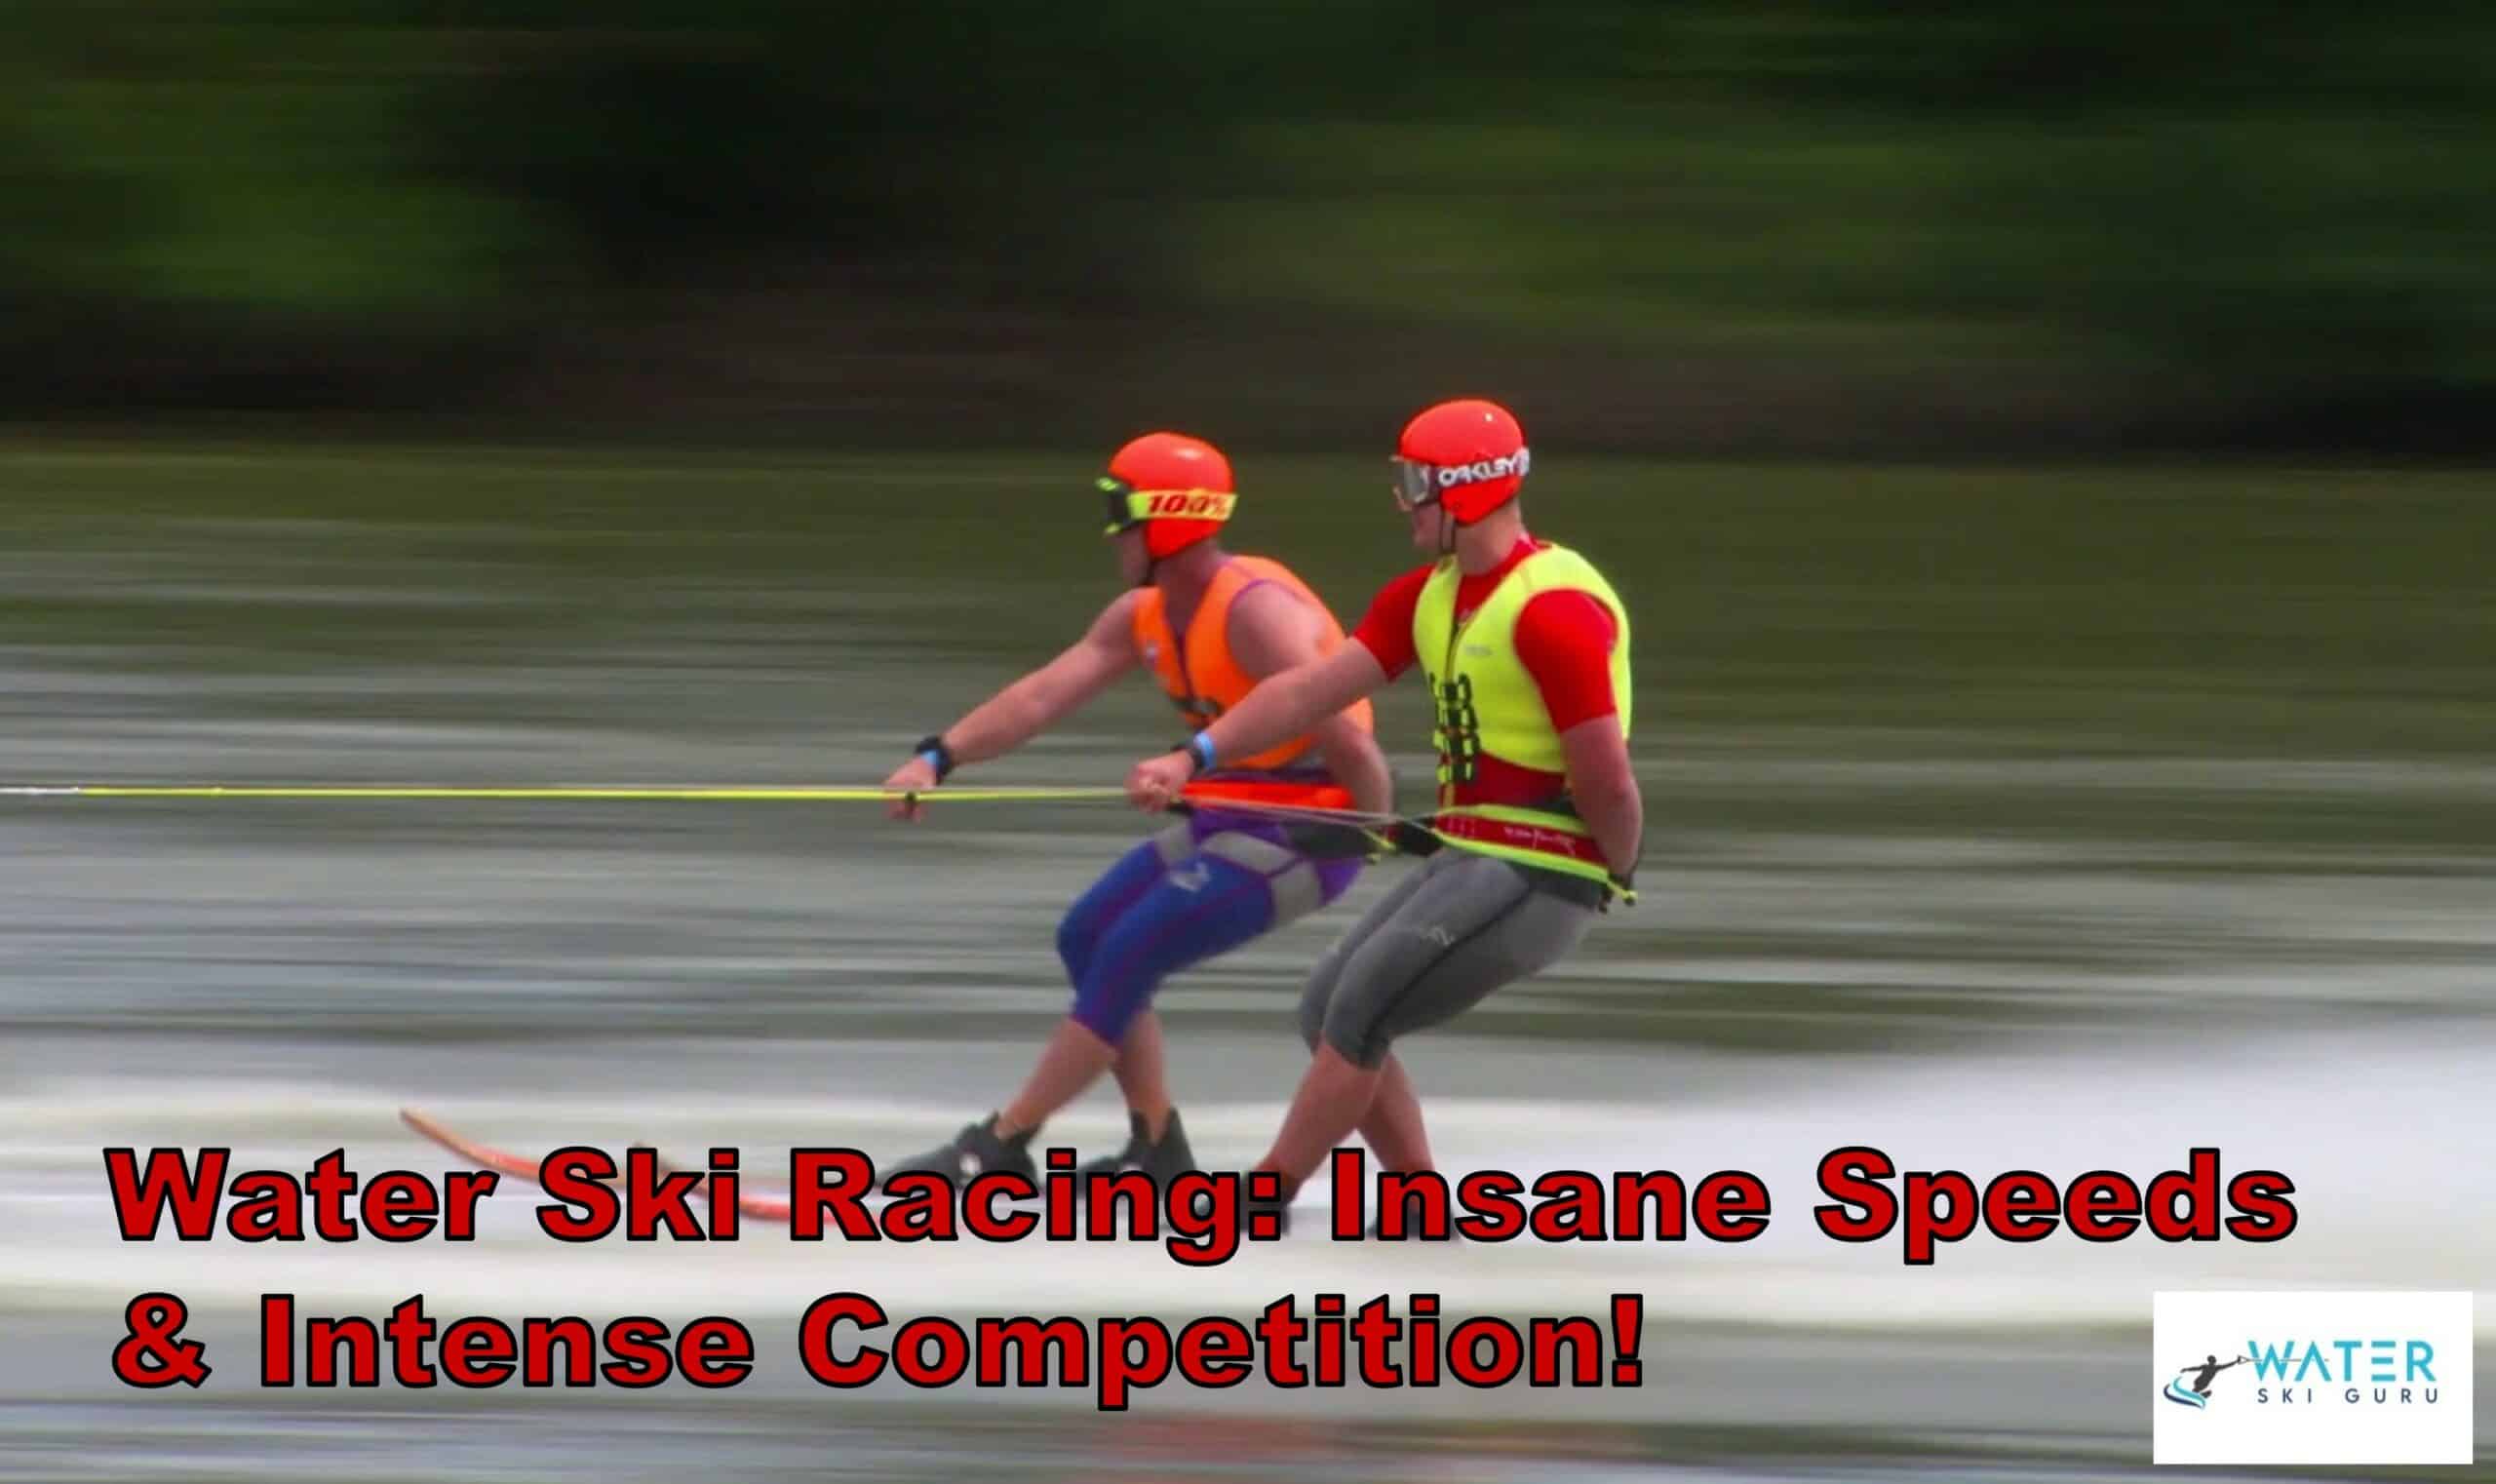 Water Ski Racing: Insane Speeds & Intense Competition!